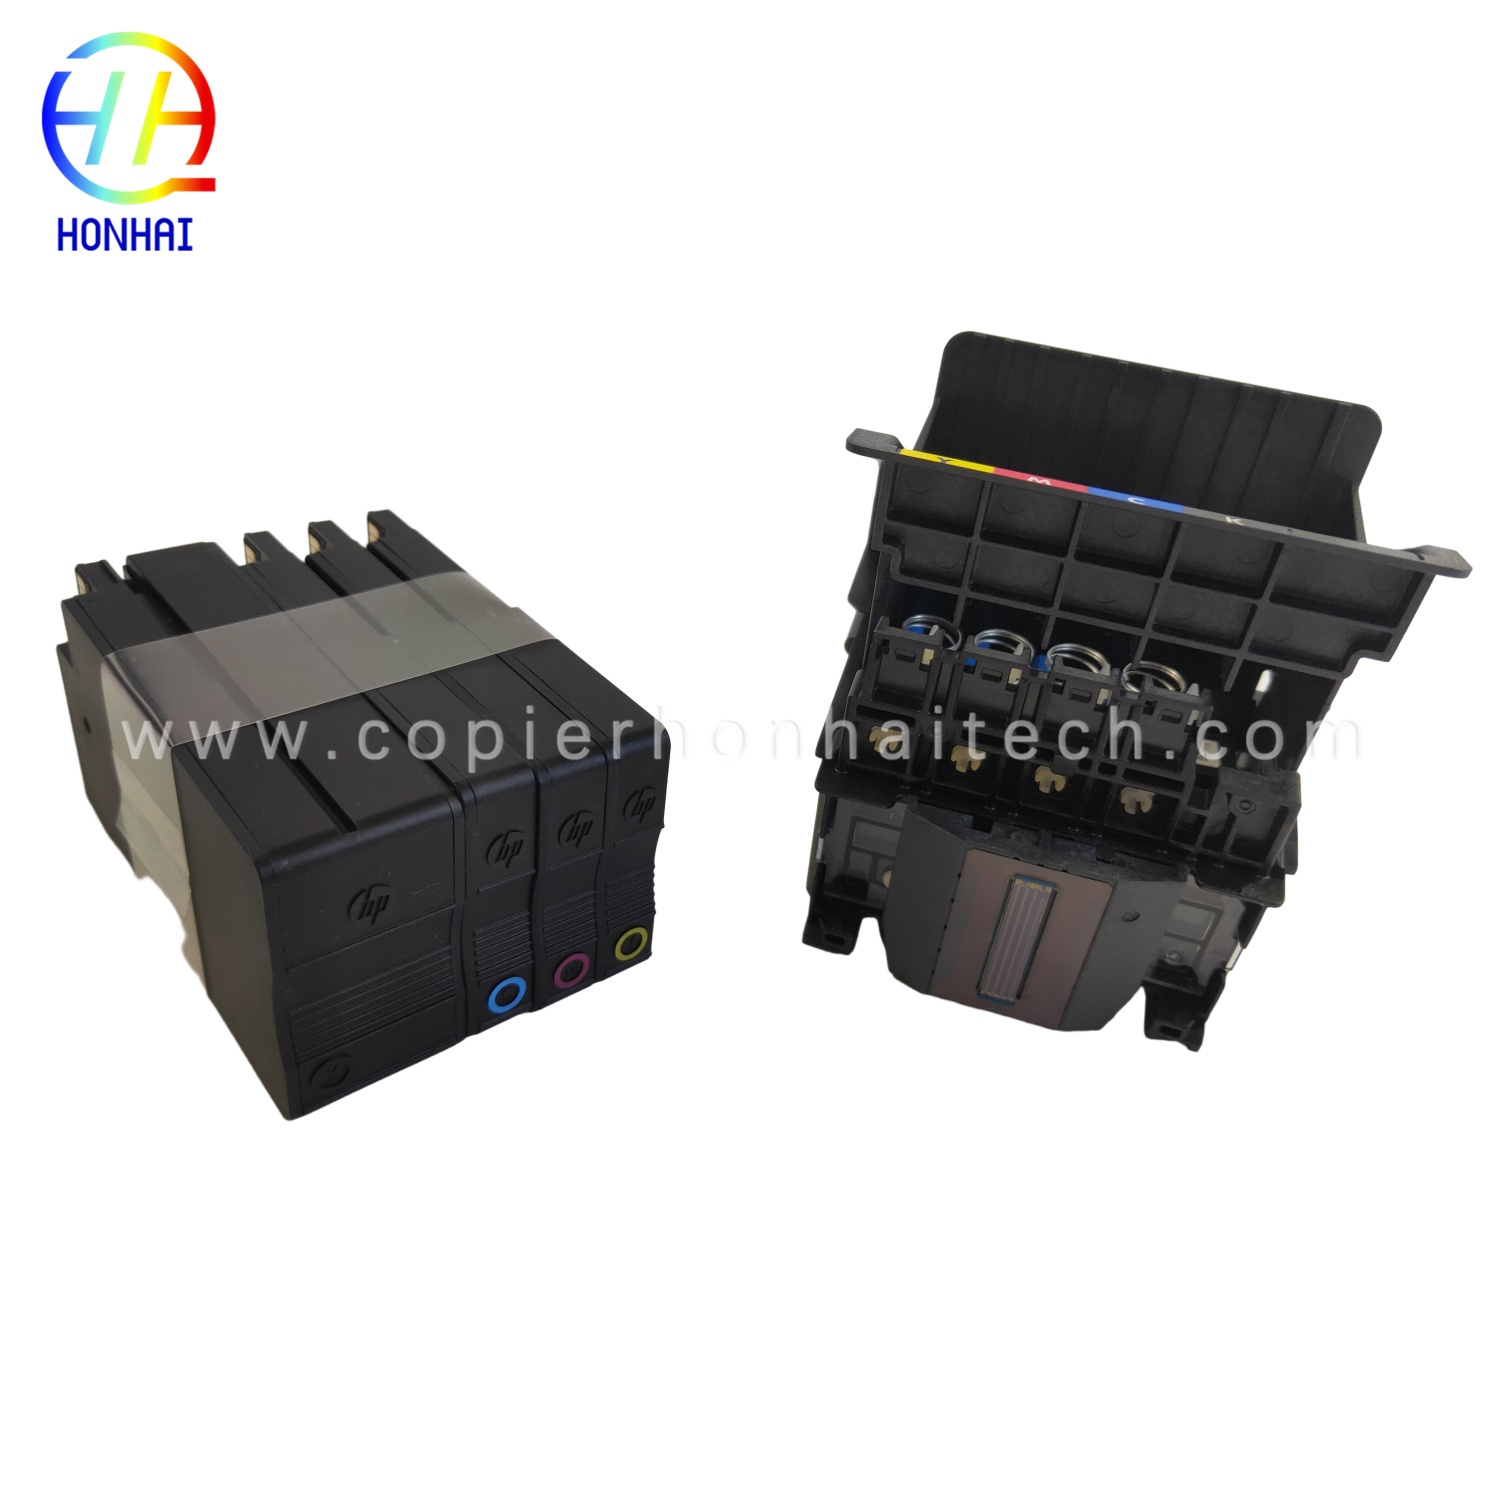 https://www.copierhonhaitech.com/original-new-gd-c1q10a-elp-garuda-printing-head-replacement-kit-for-hp-designjet-t120-t125-t130-t520-t525-t530-product/